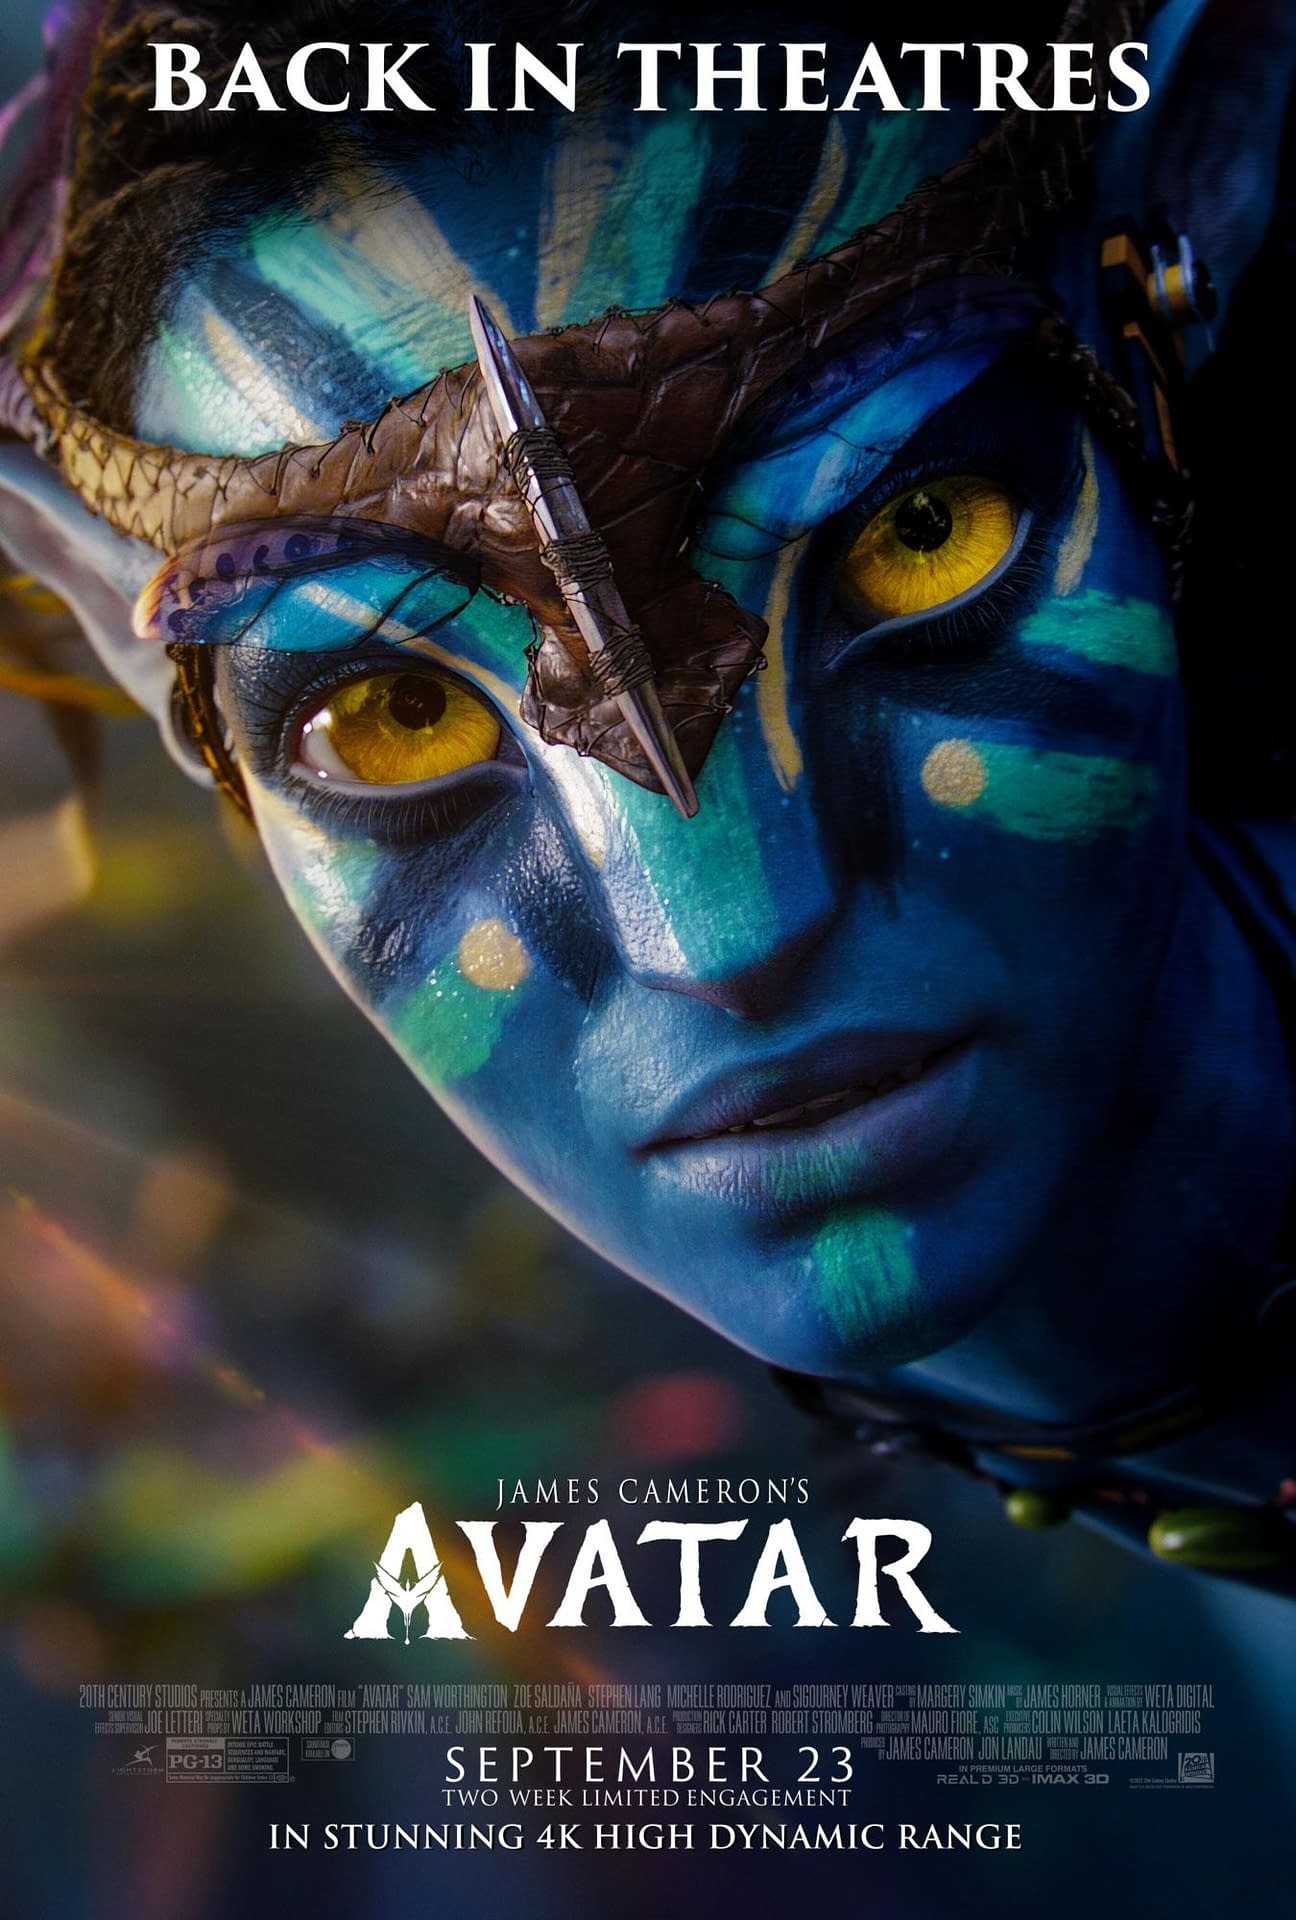 my film journal: Avatar